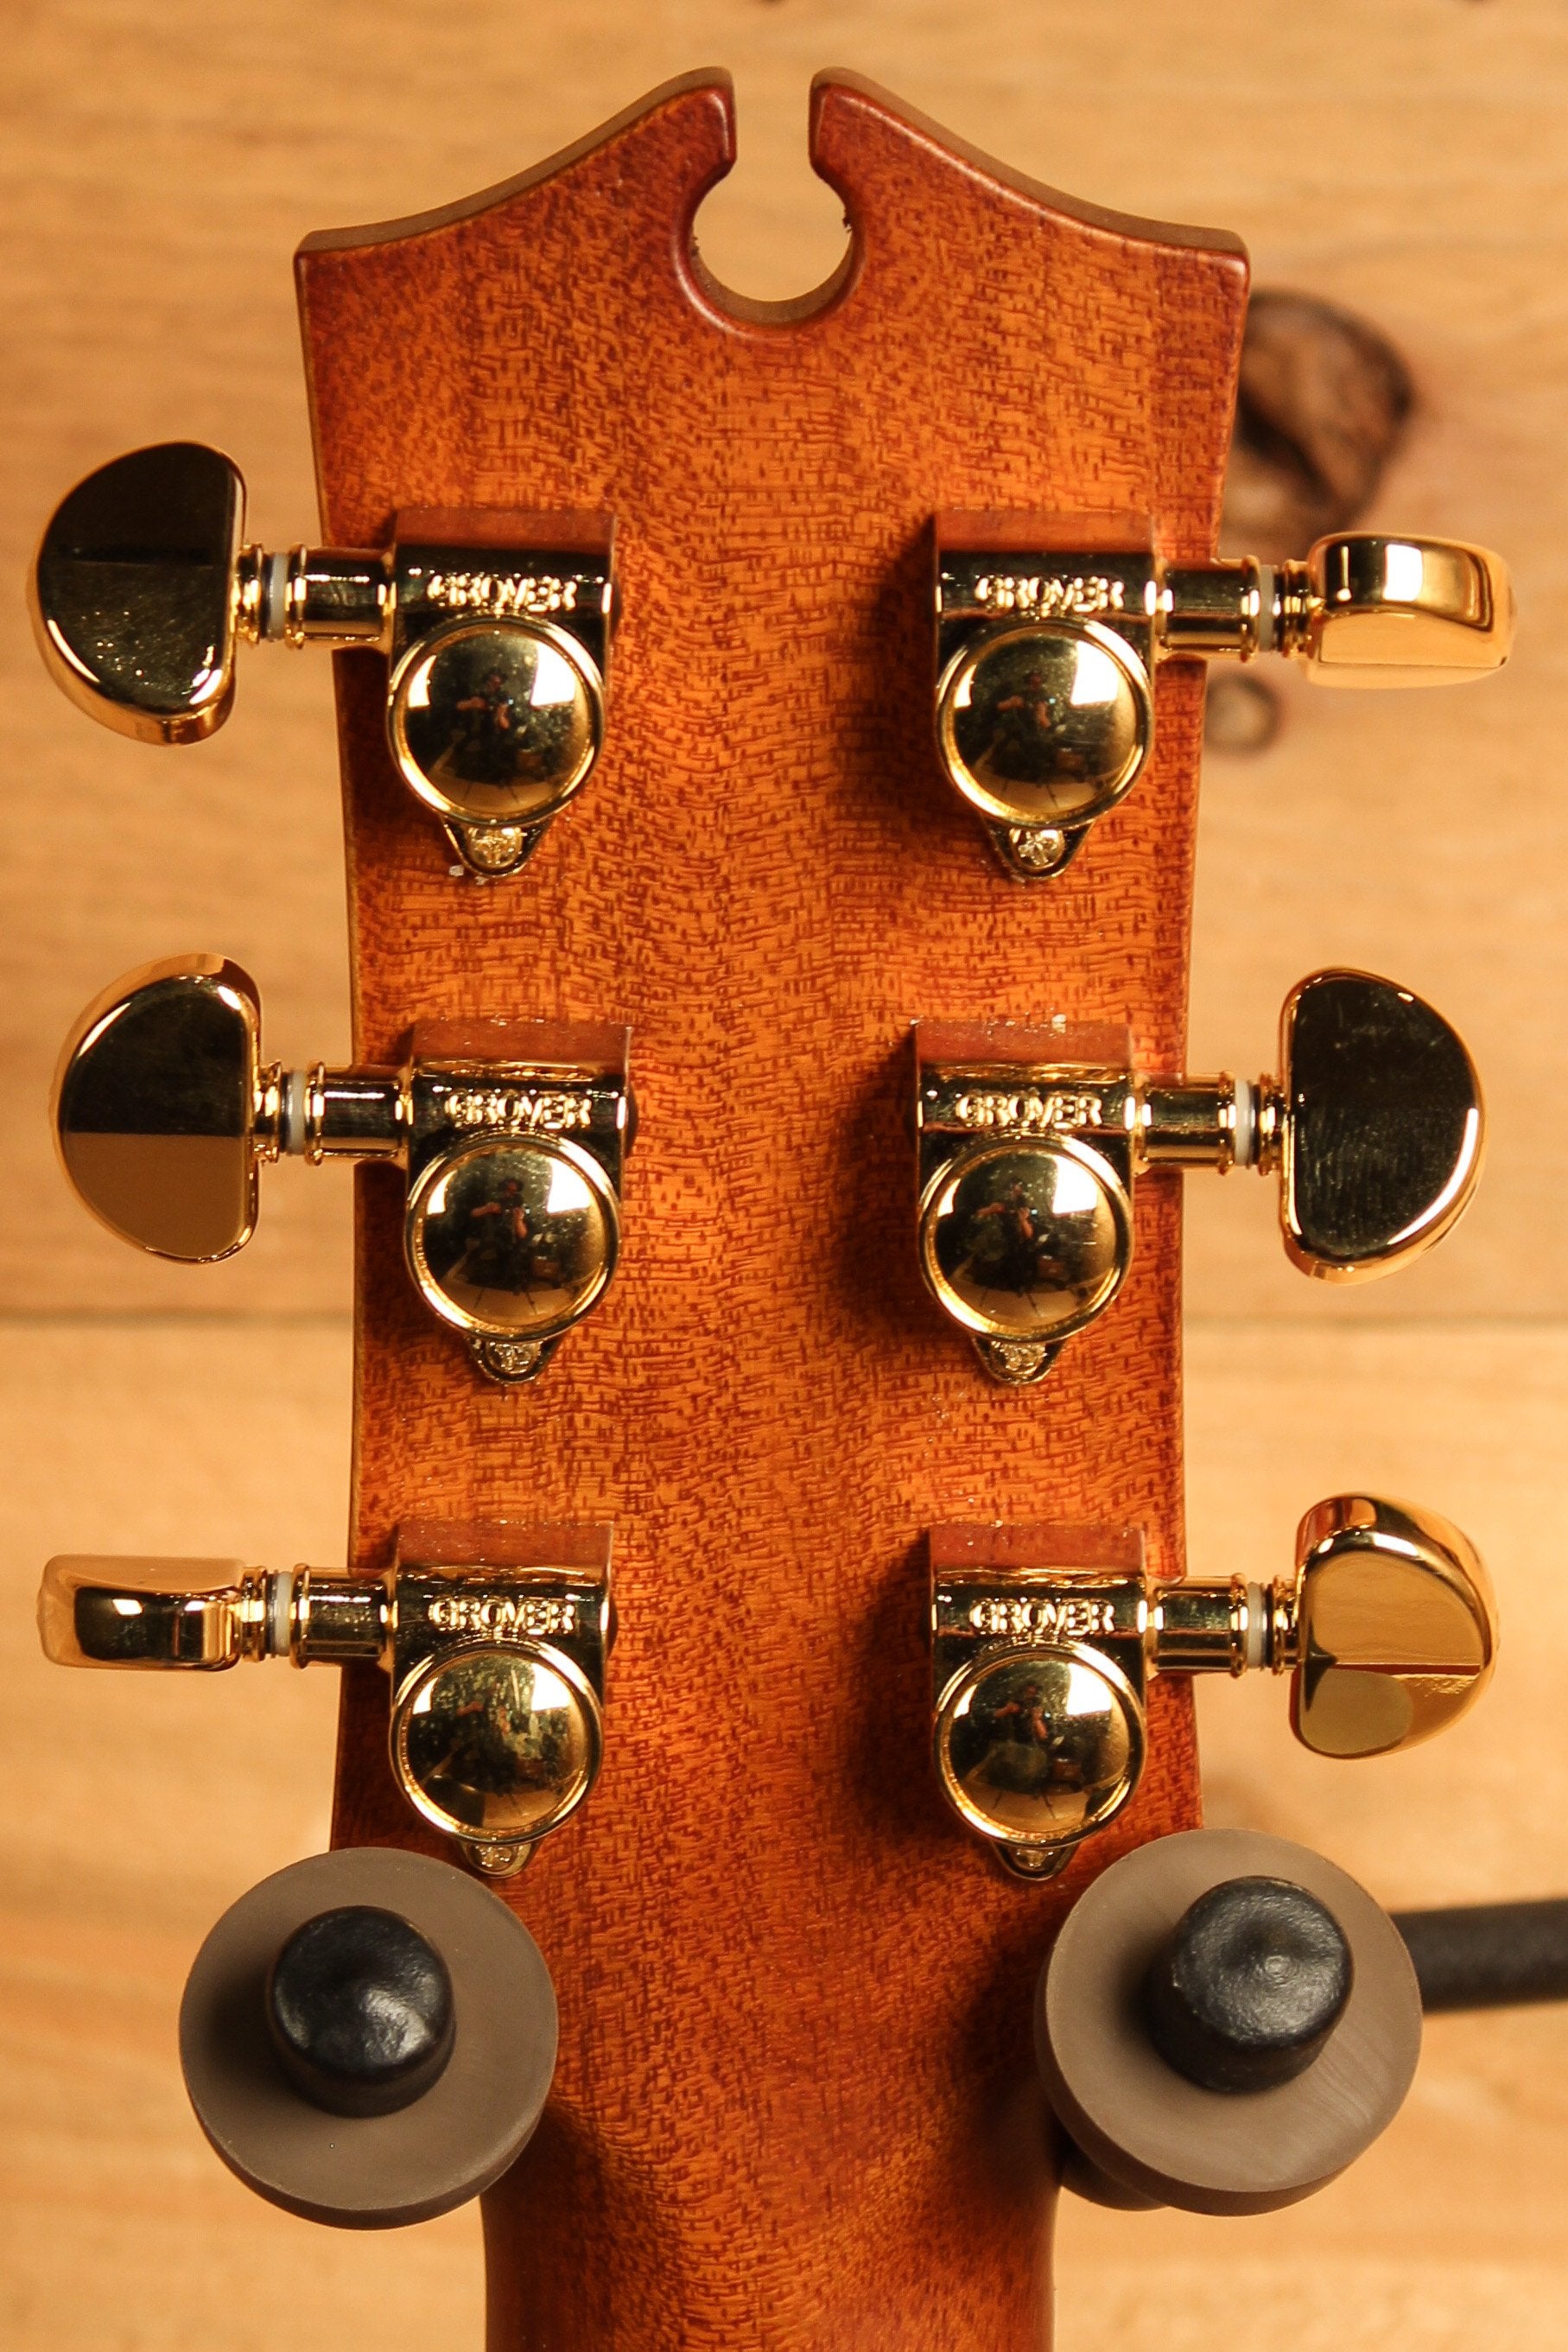 Maton EBG808 Nashville Series Sitka Spruce and Australian Blackwood ID-13432 - Artisan Guitars